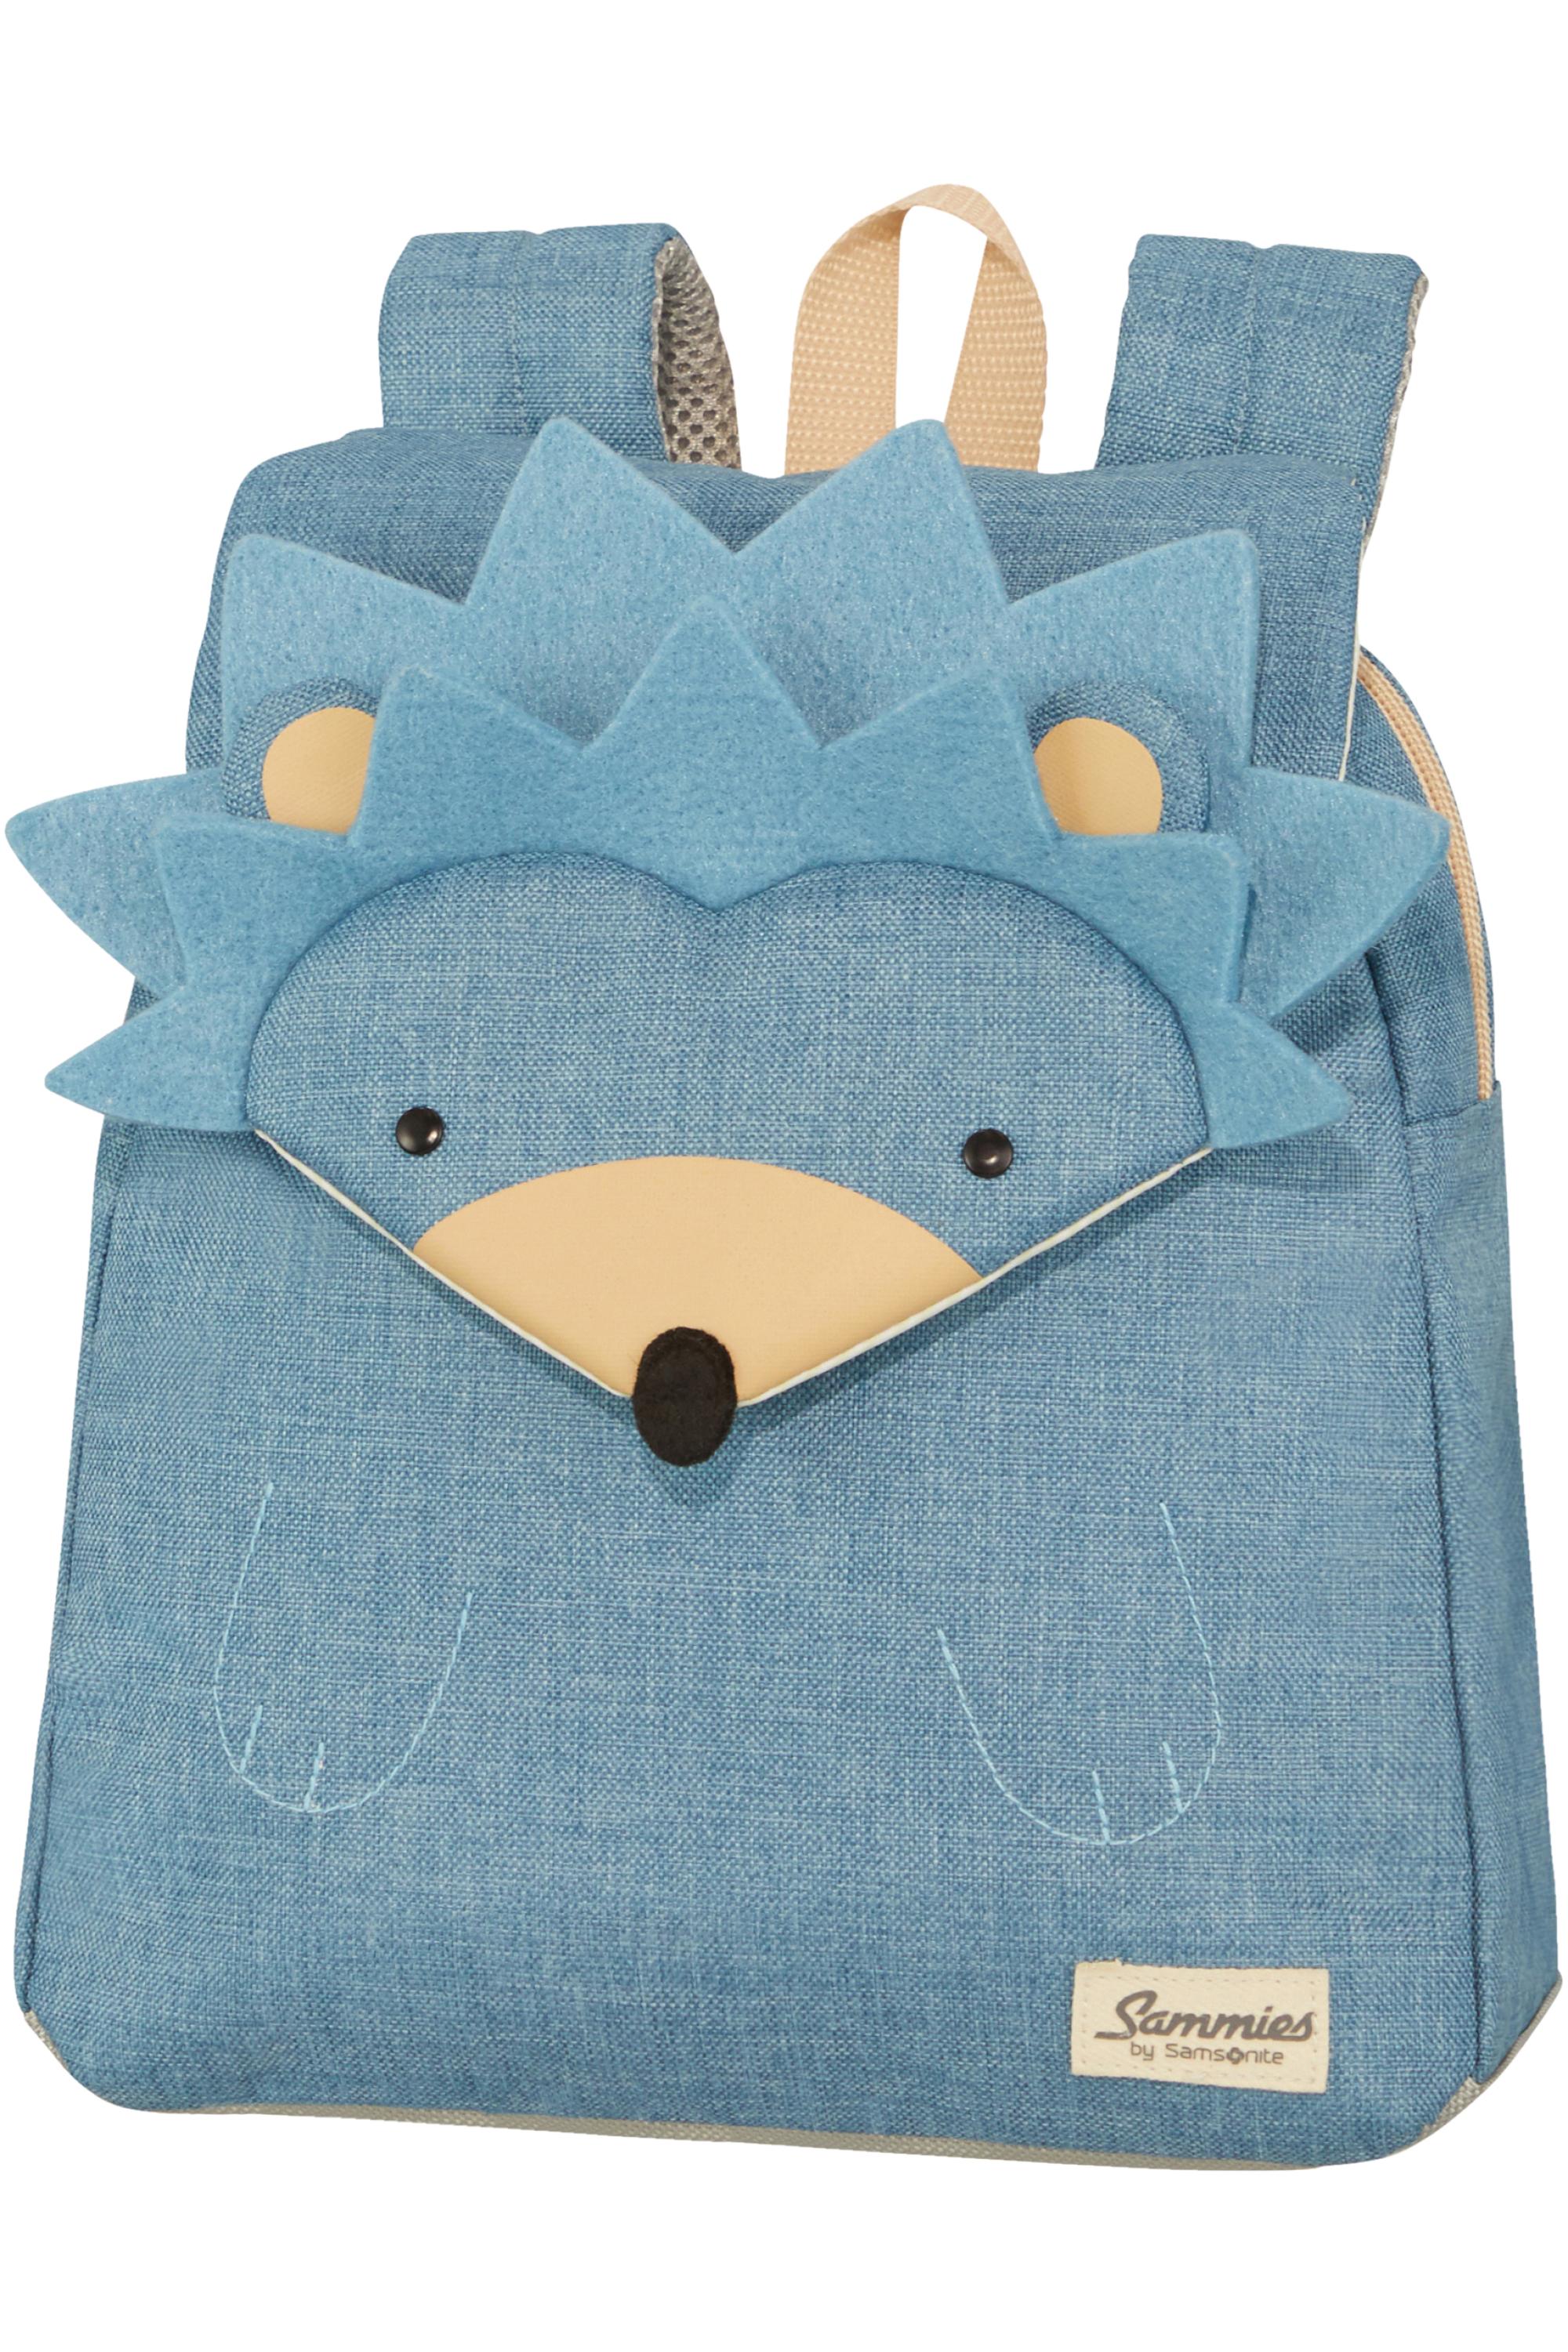 34 cm Hedgehog Harris Bleu Sac à Dos Enfant S+ 11 L Samsonite Happy Sammies 